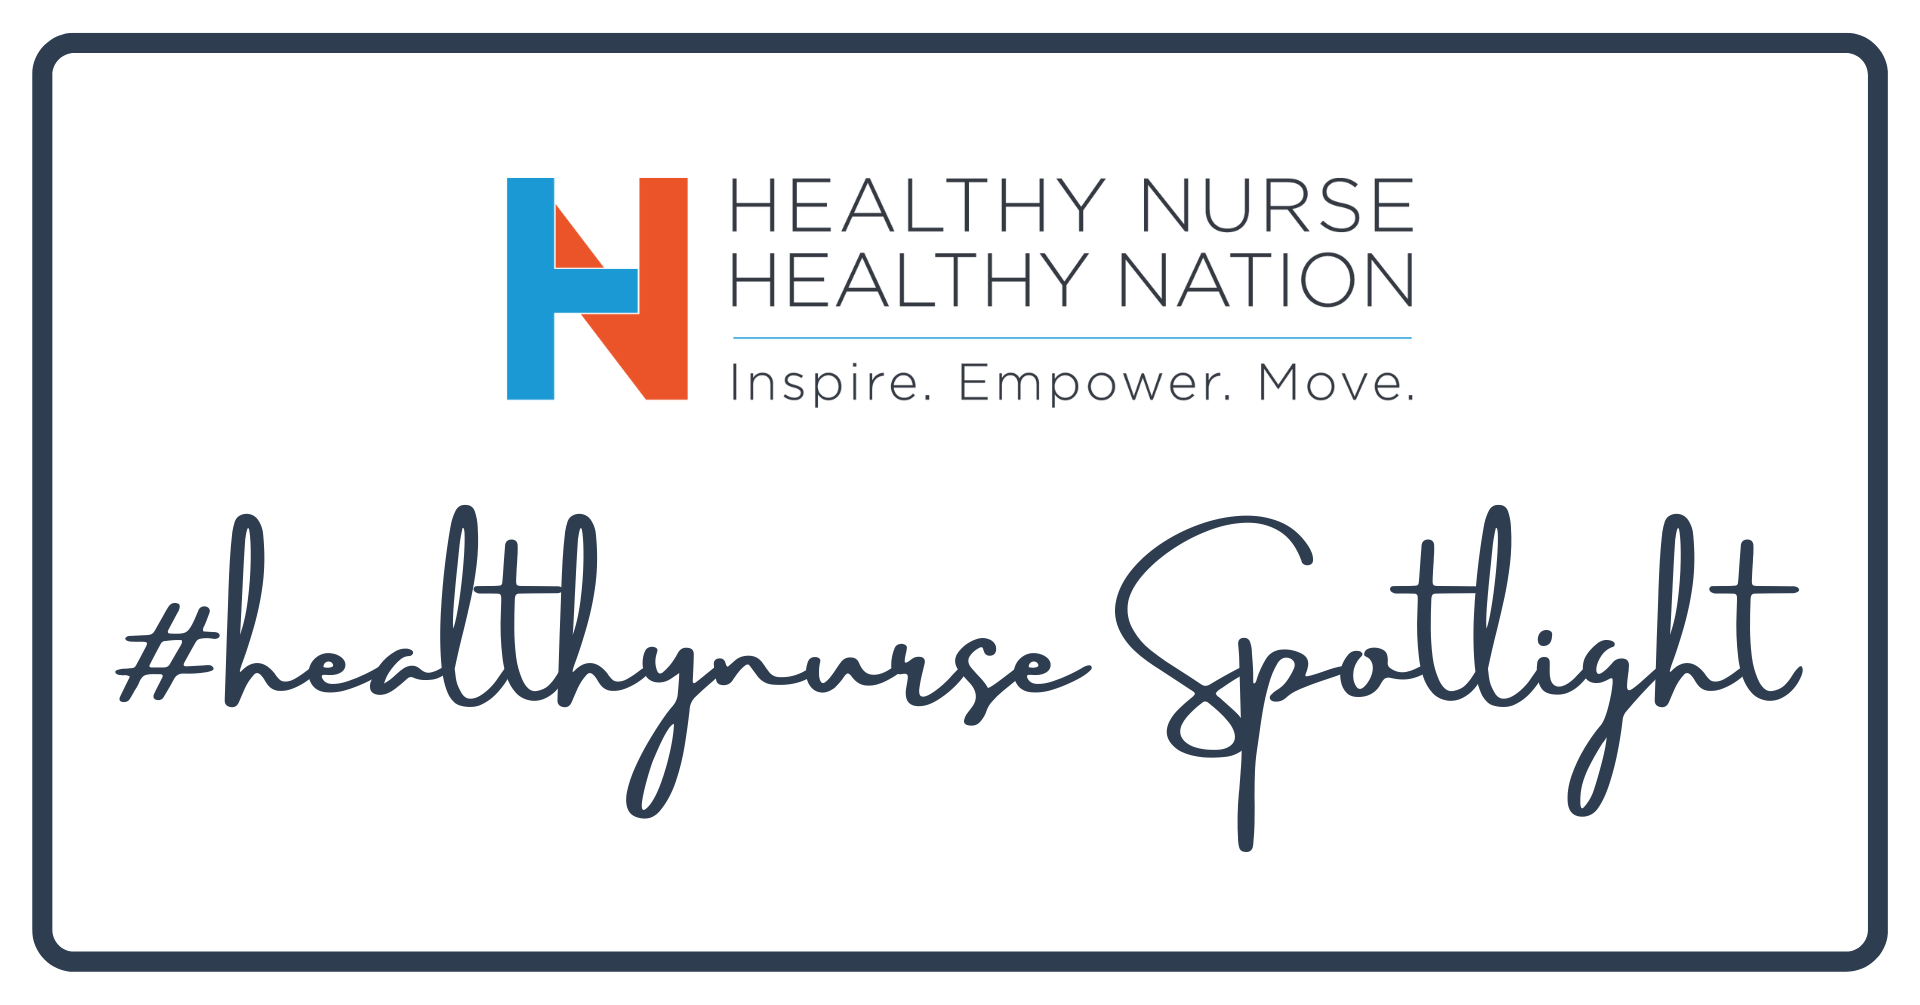 Healthy Nurse, Healthy Nation™ - #healthynurse Spotlight Series - Ira Friddle, RN, BSN 4309